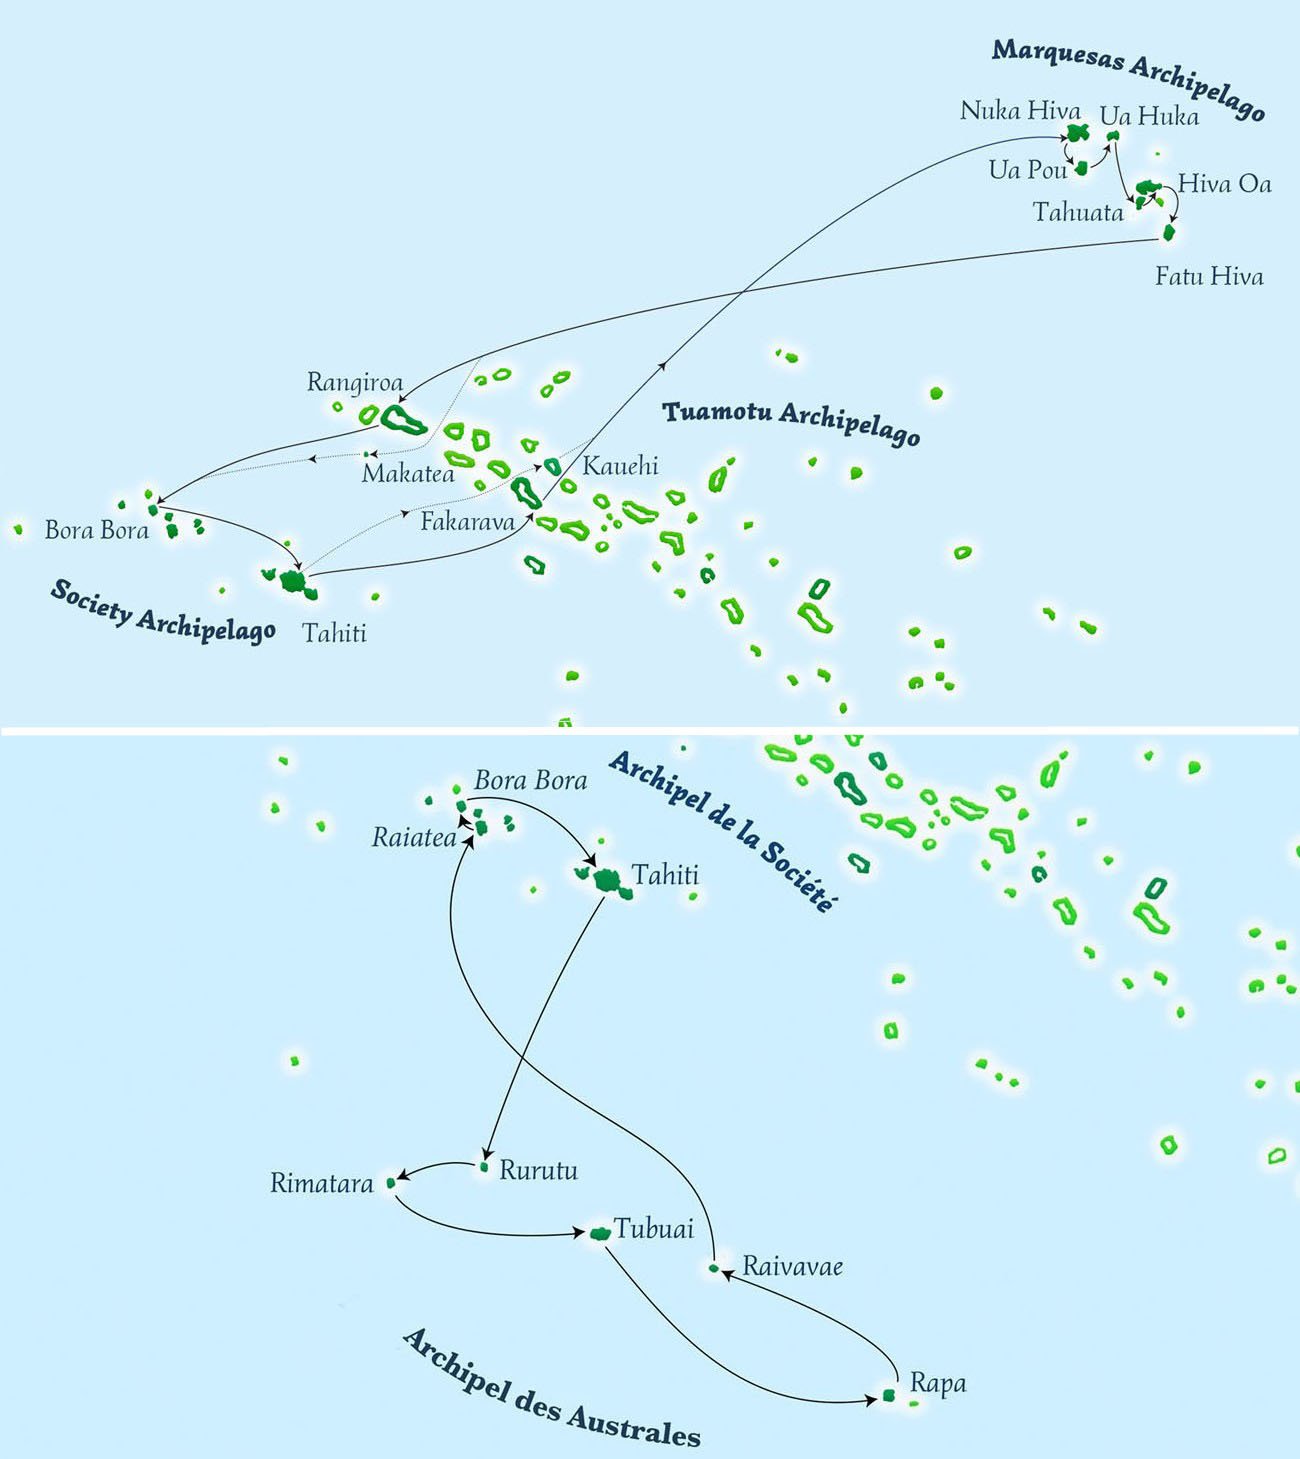 Marquesas and Australes archypelagos